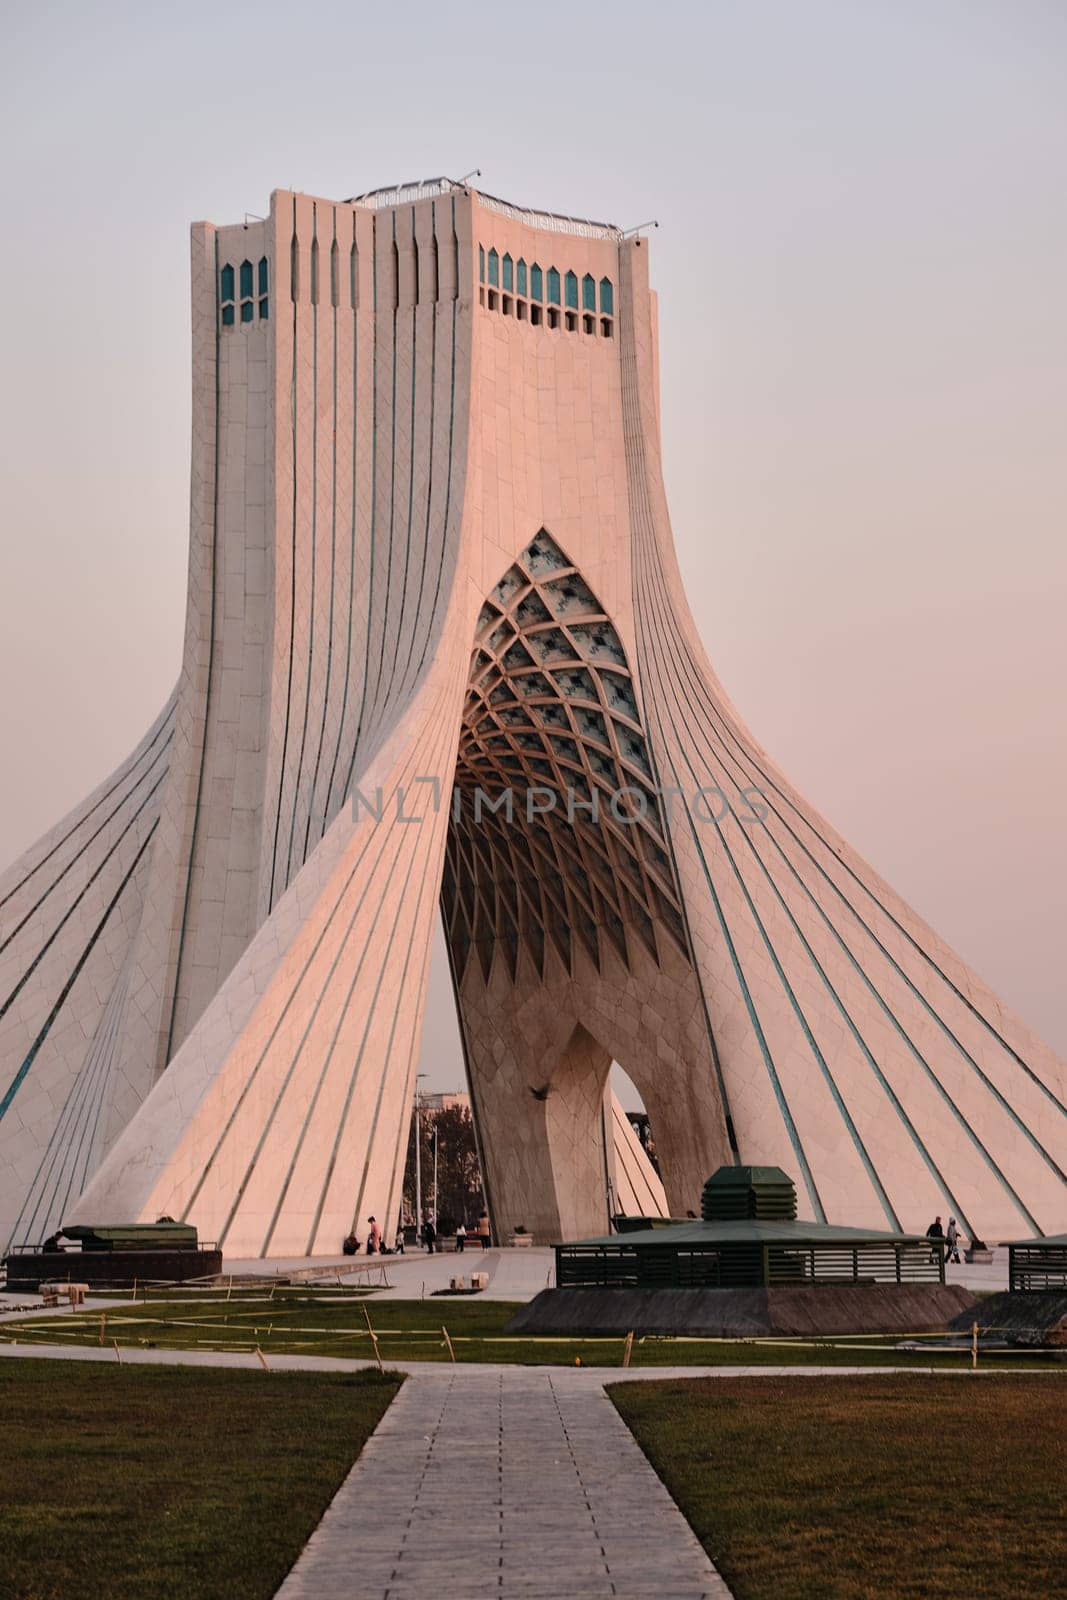 Azadi Tower is a symbol of freedom in Iran, the main symbol of Iran's capital. MS ZI LA Azadi Tower - Freedom Tower, the gateway to Tehran, Popular tourist point at twilight. 02.12.23 Tehran, Iran.